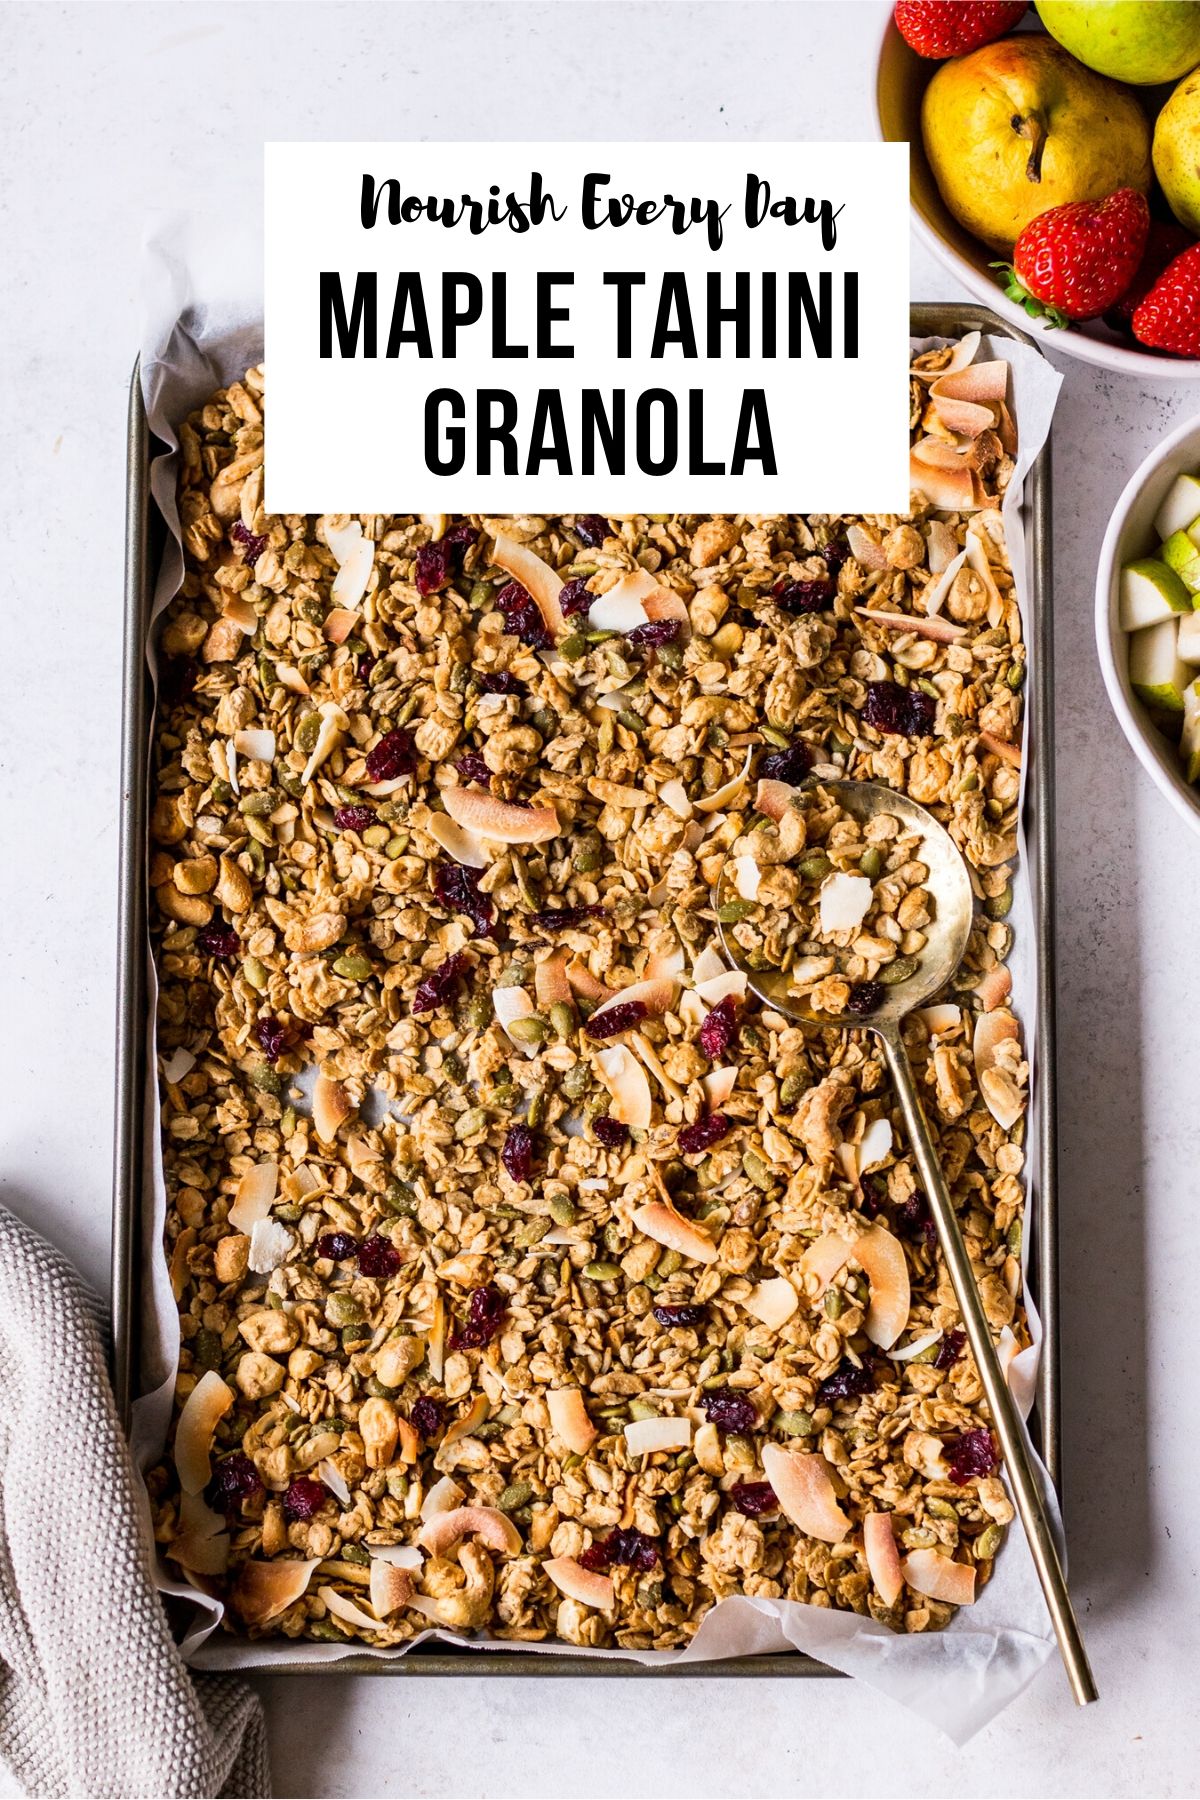 Maple Tahini Granola Recipe Pin by Nourish Every Day